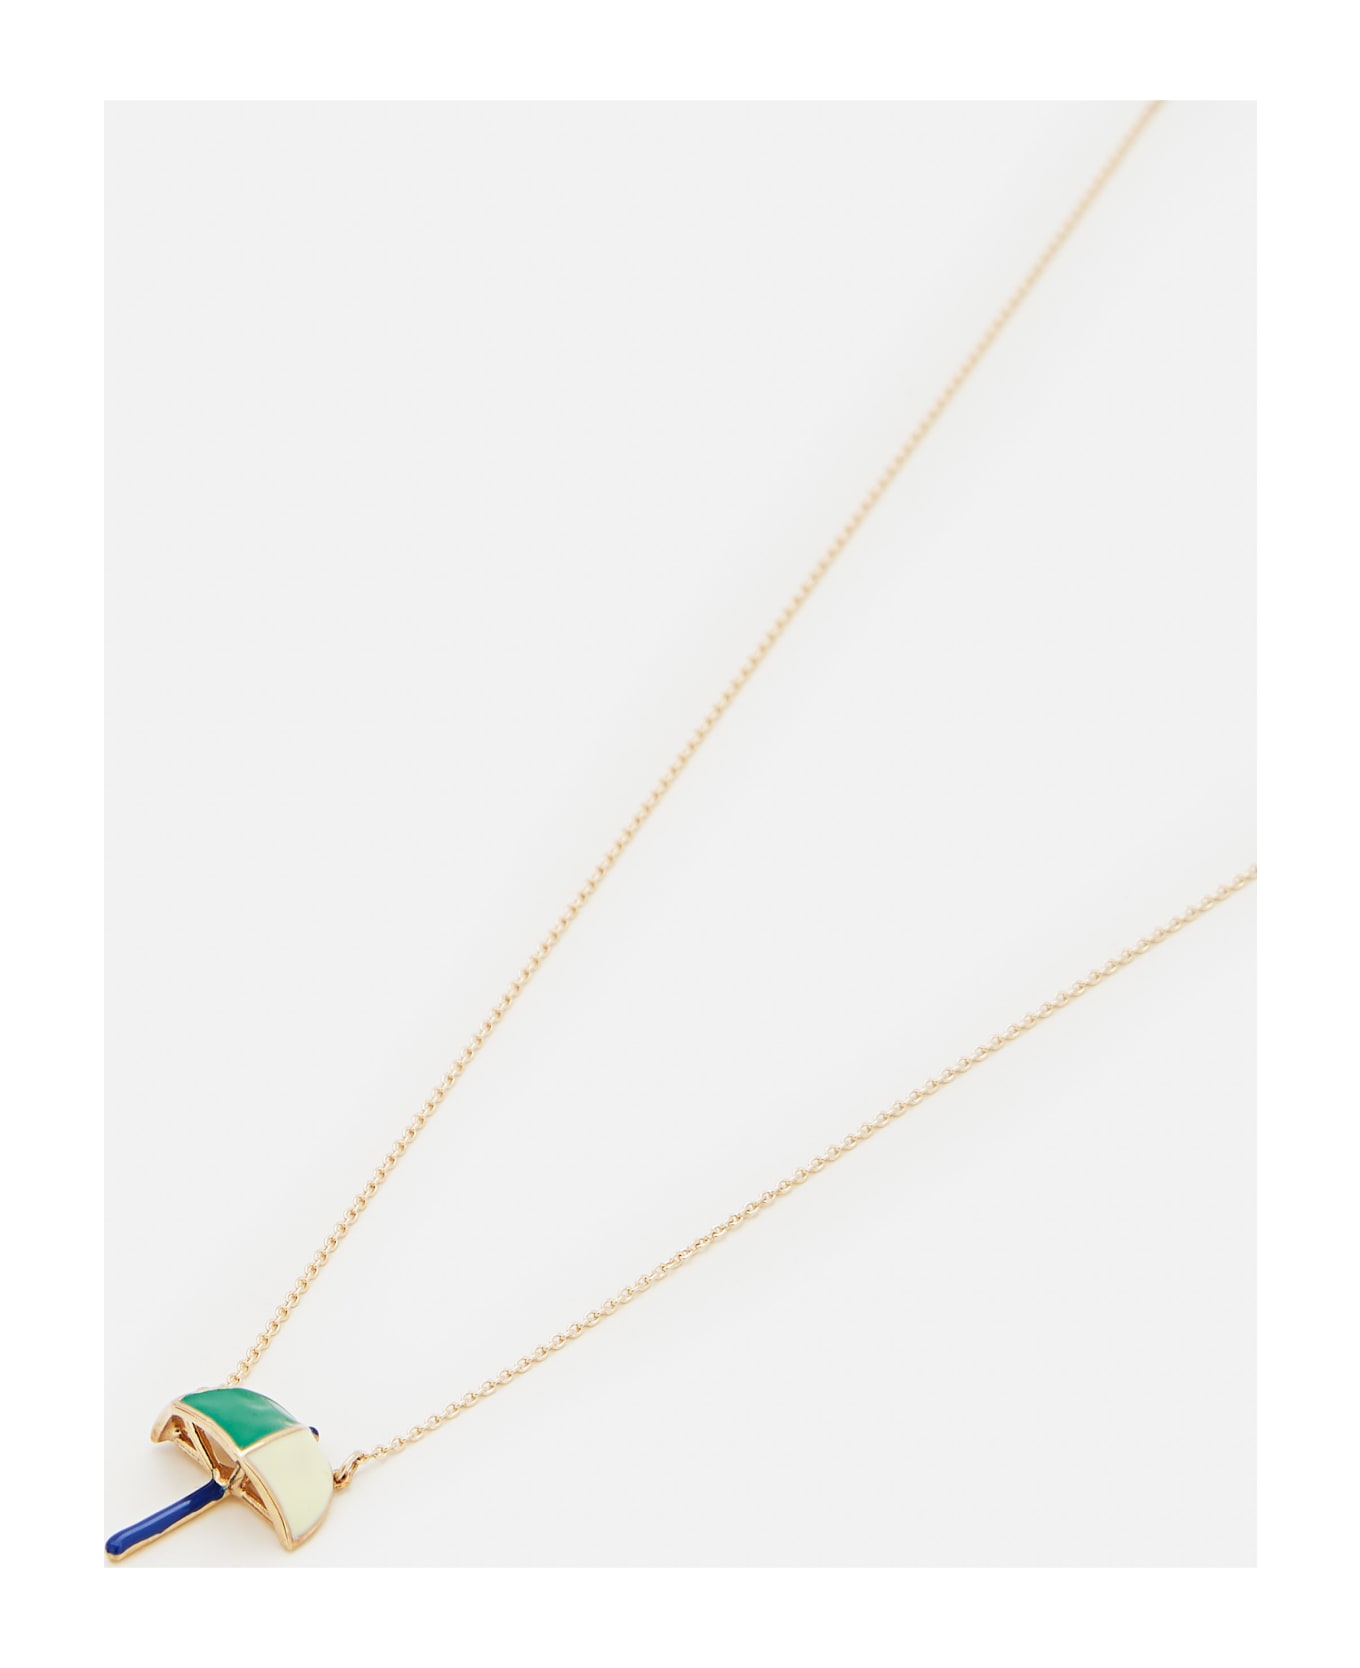 Aliita 9k Gold Sombrilla Polished Necklace - Green